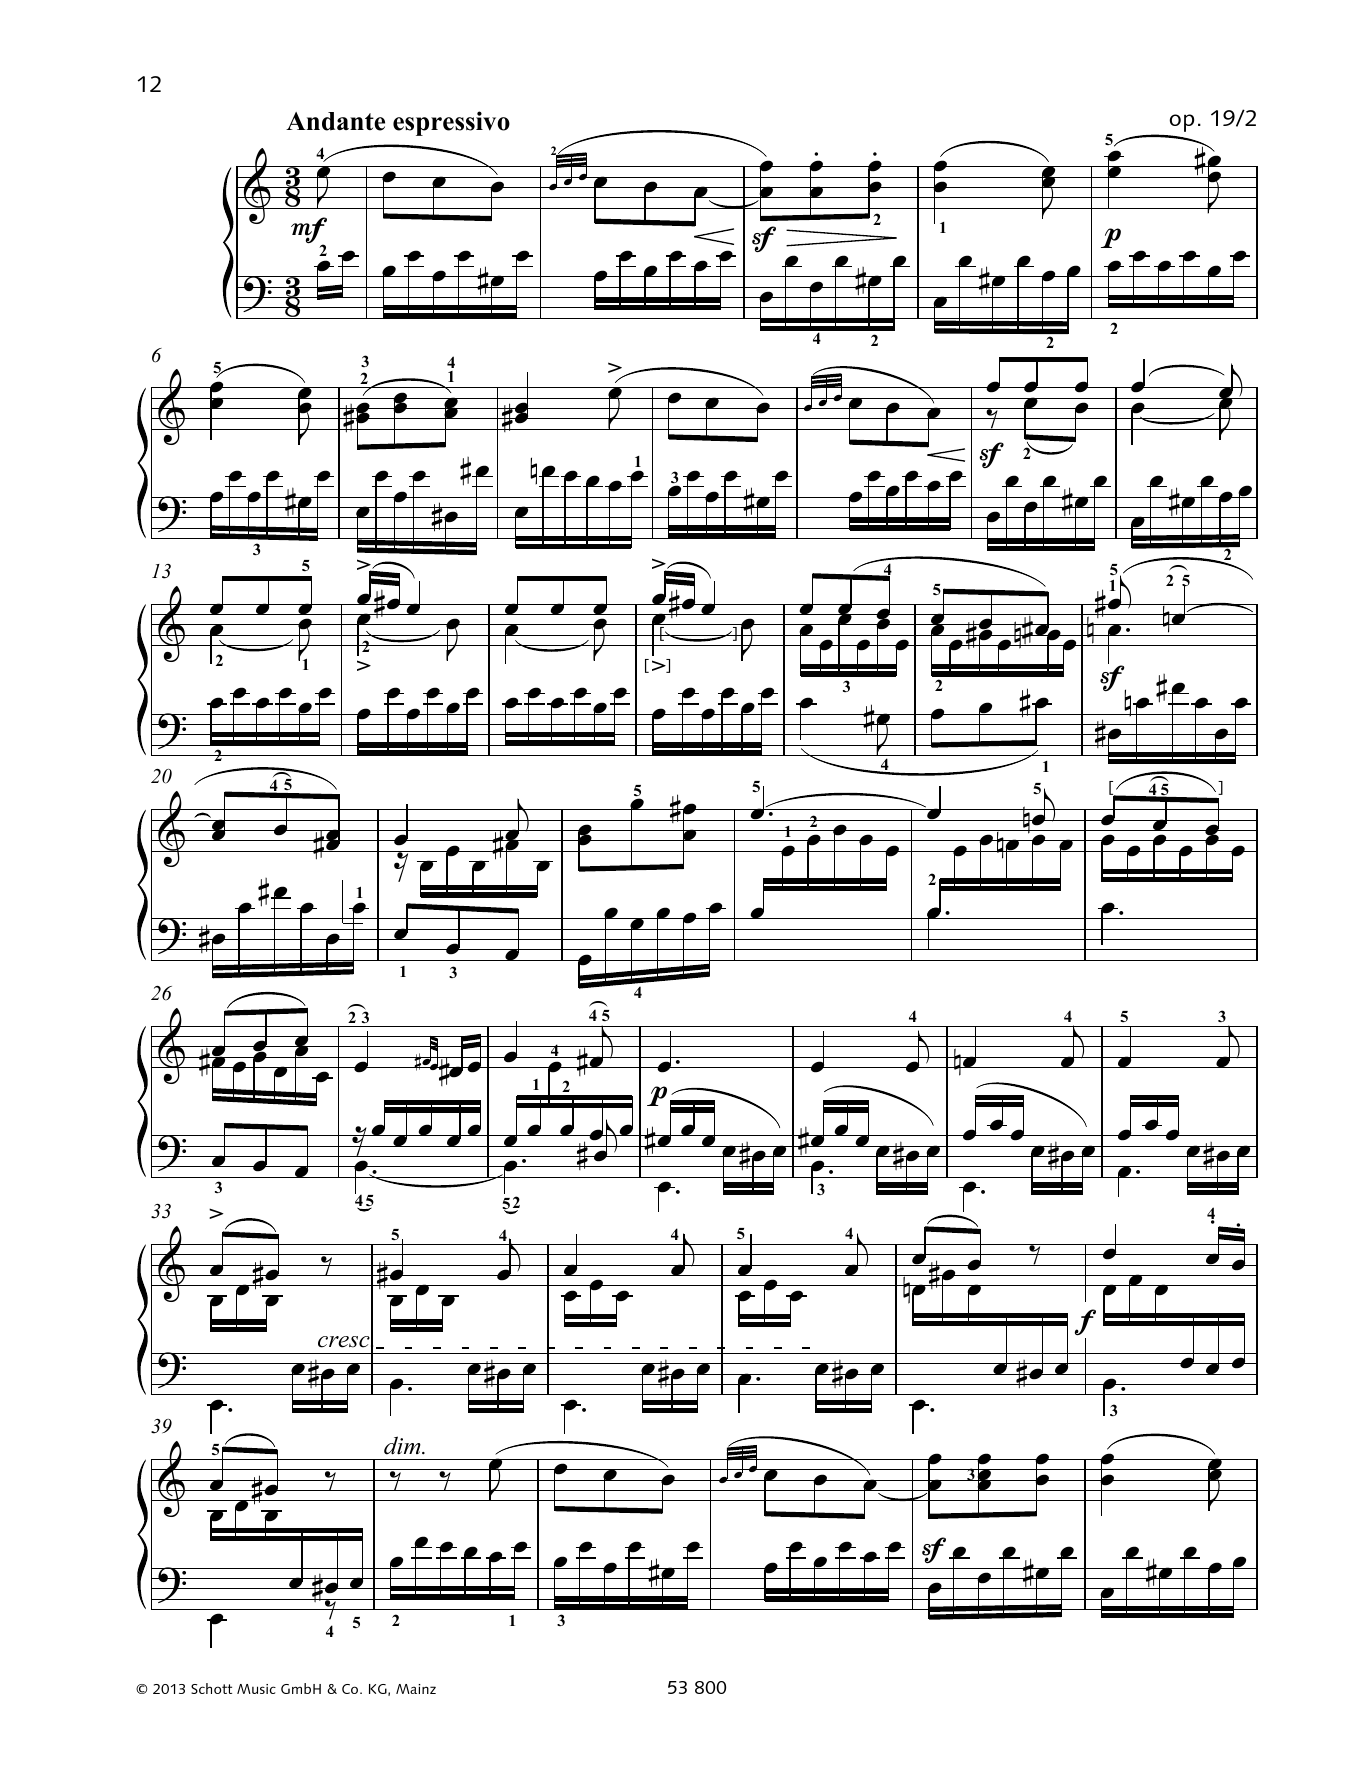 Felix Mendelssohn Bartholdy Andante espressivo Sheet Music Notes & Chords for Piano Solo - Download or Print PDF